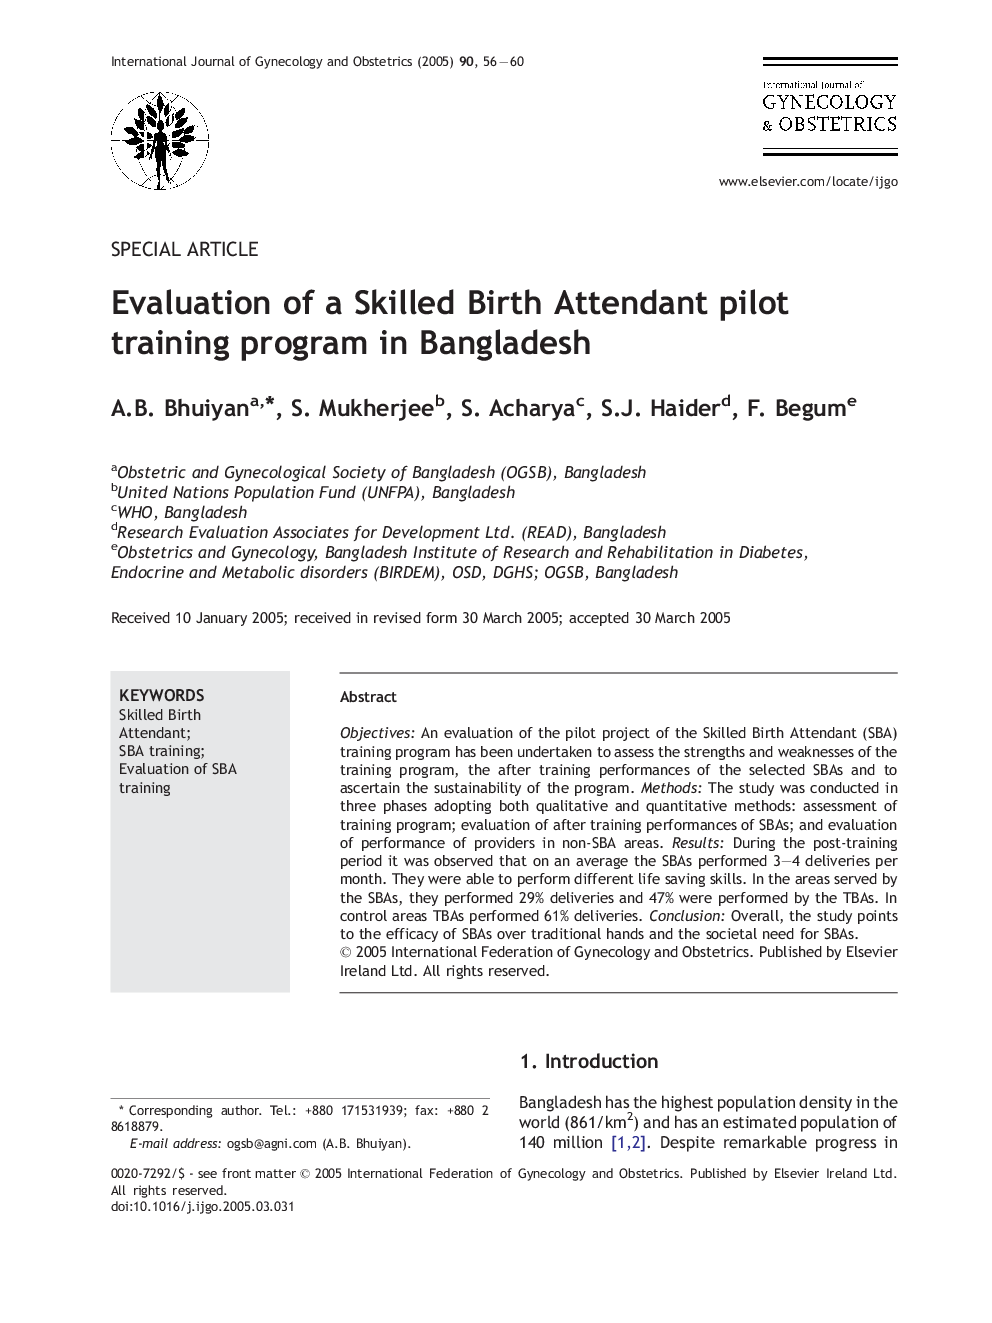 Evaluation of a Skilled Birth Attendant pilot training program in Bangladesh